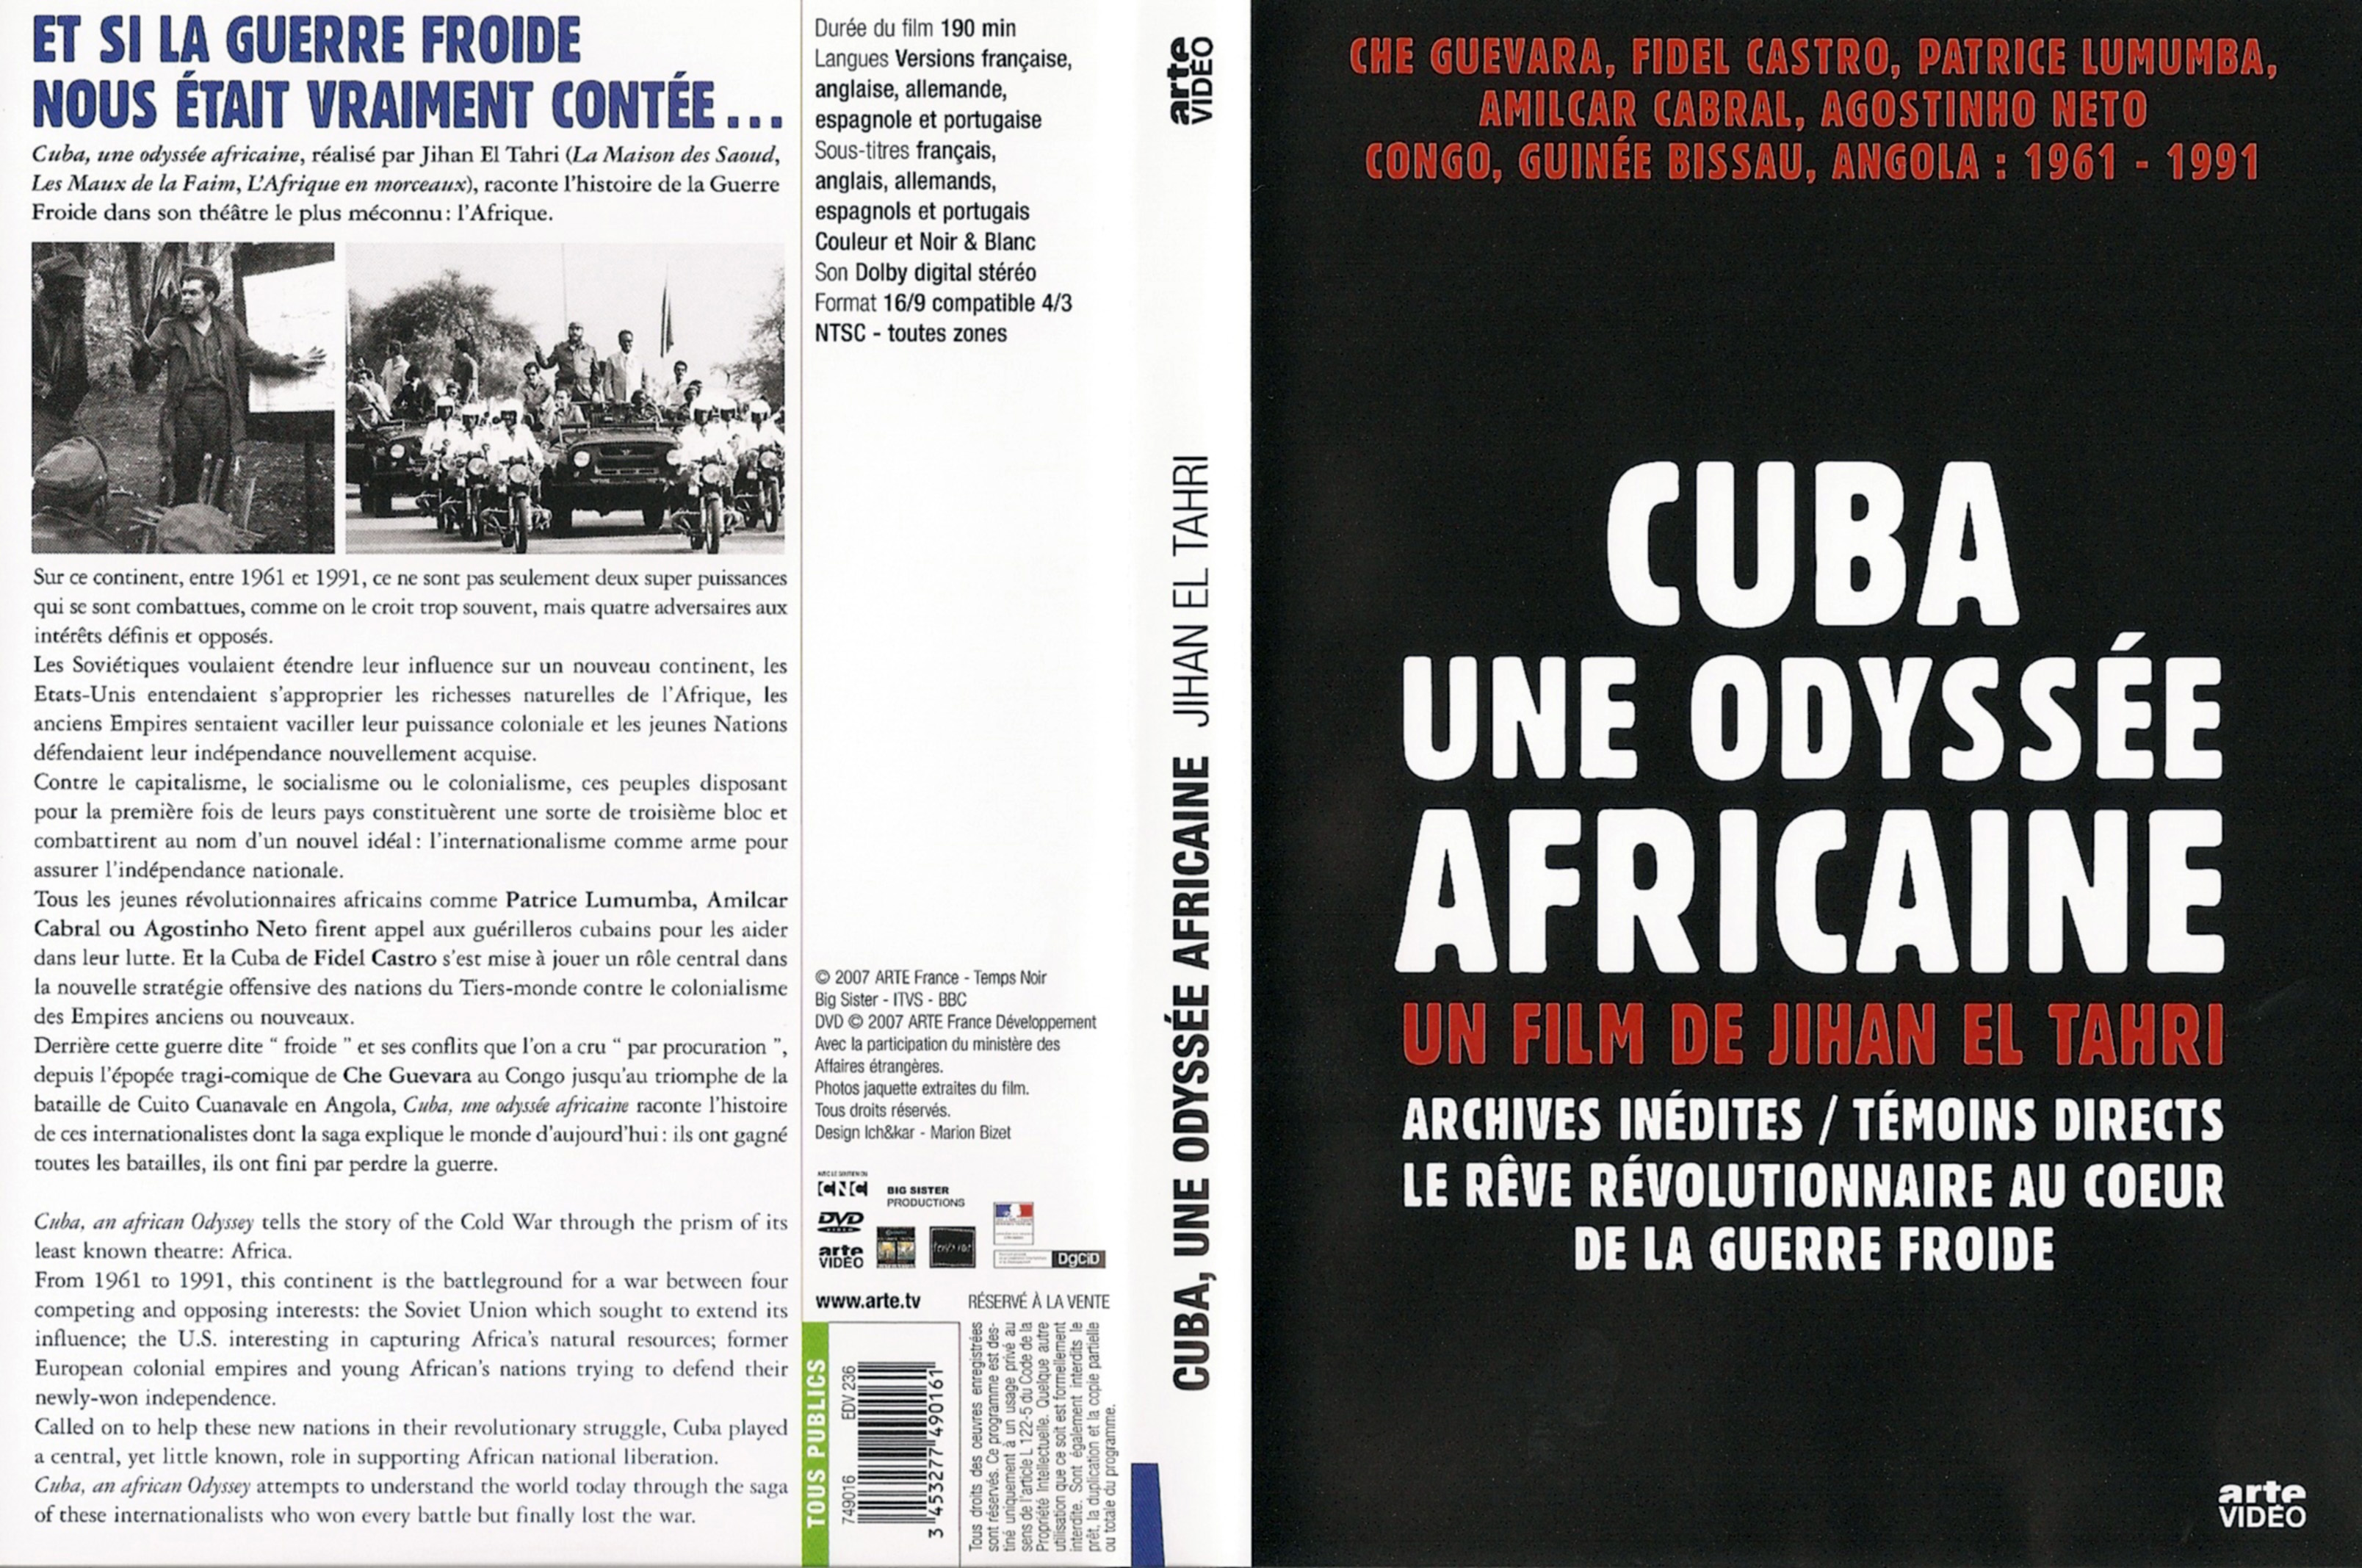 Jaquette DVD Cuba une odysse africaine